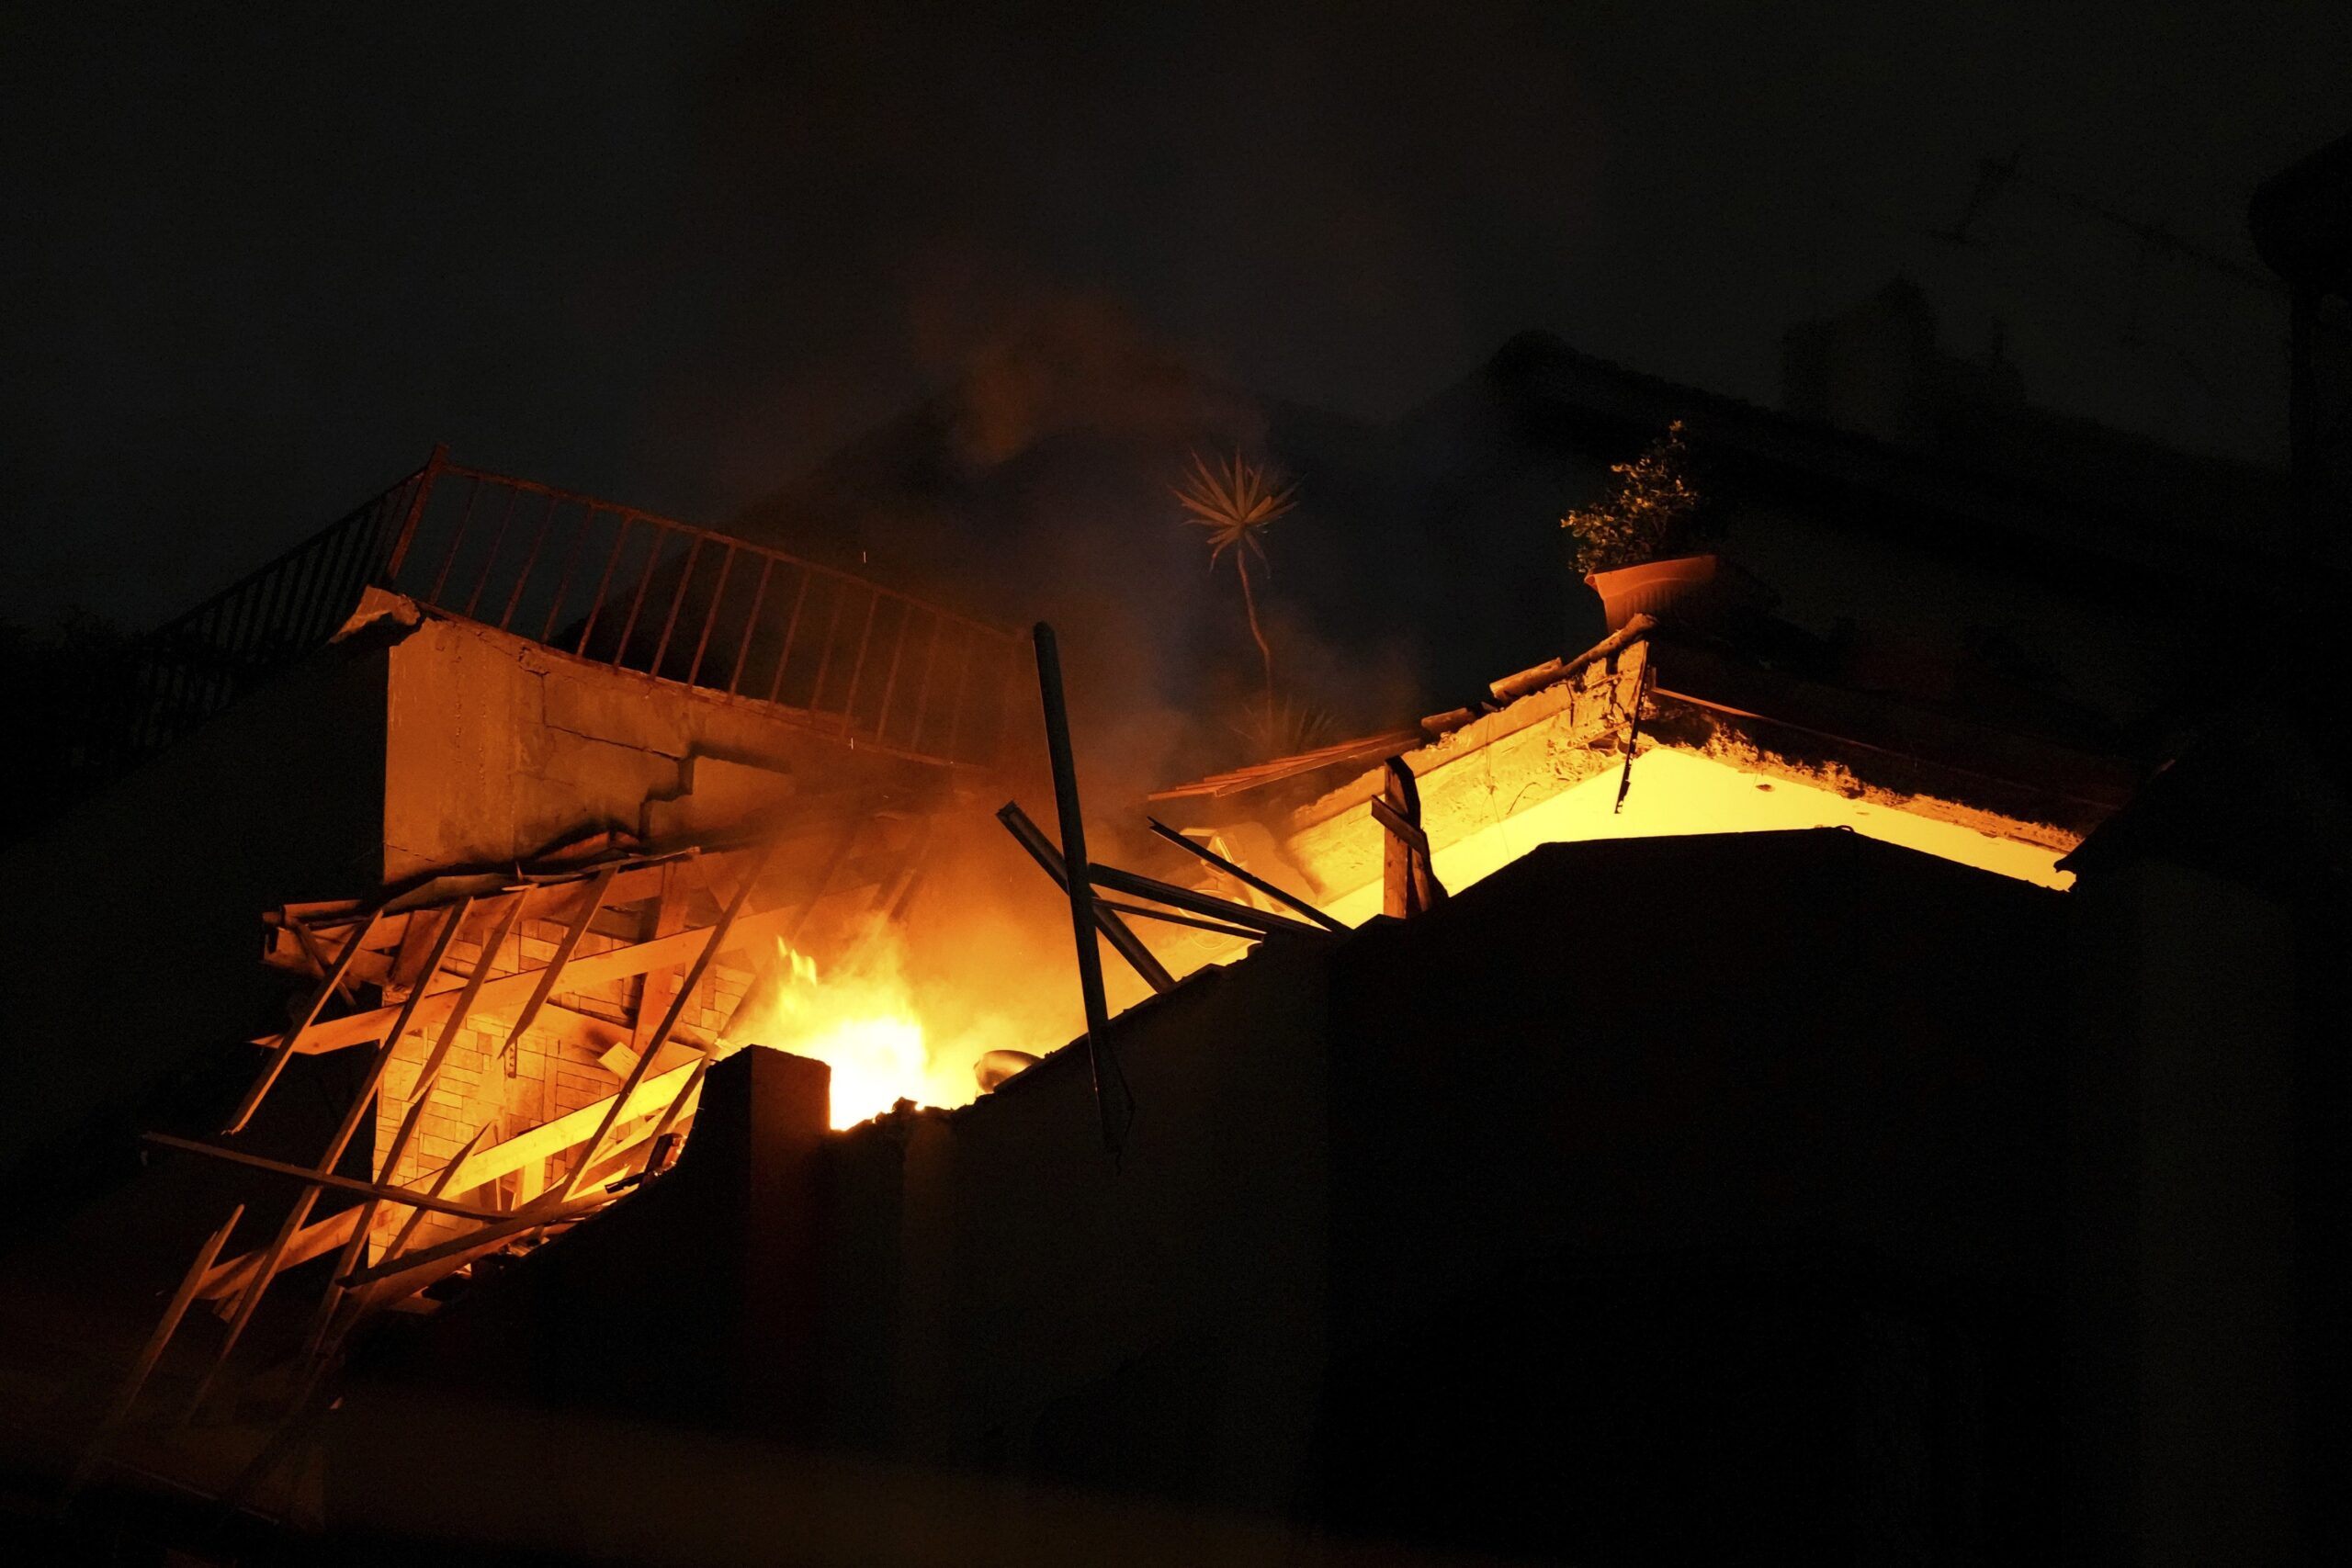 Bihar: Miscreants open fire at restaurant in Muzaffarpur, probe underway